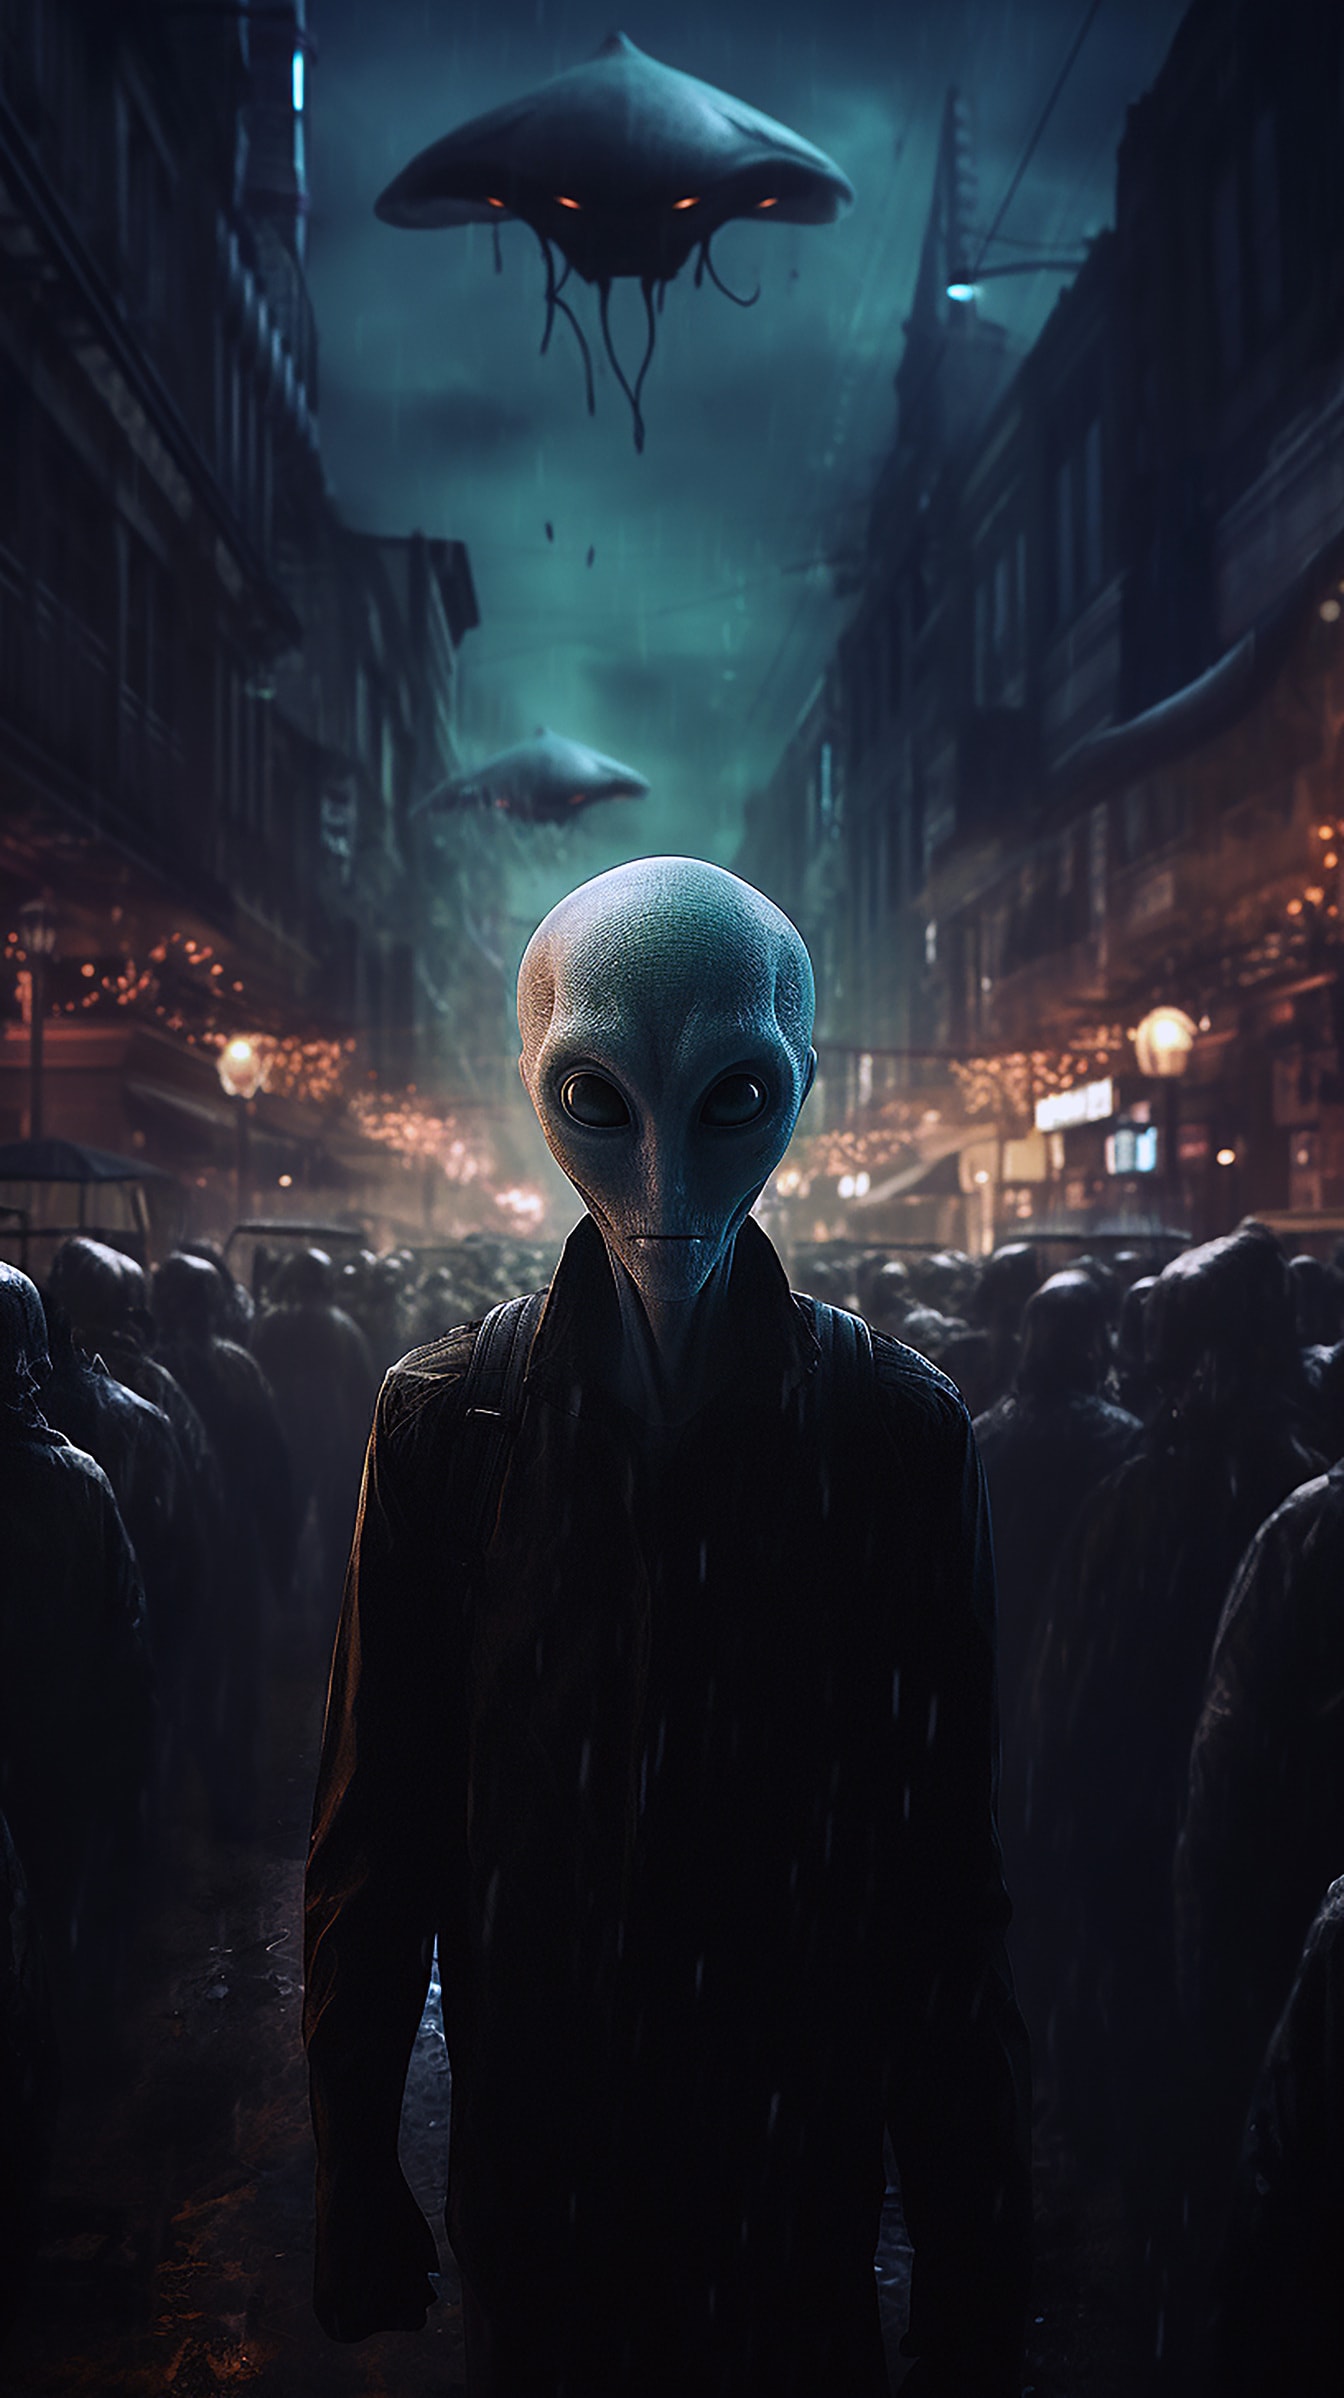 Humanoidalny kosmita na ulicy w nocy fantasy horror ilustracja